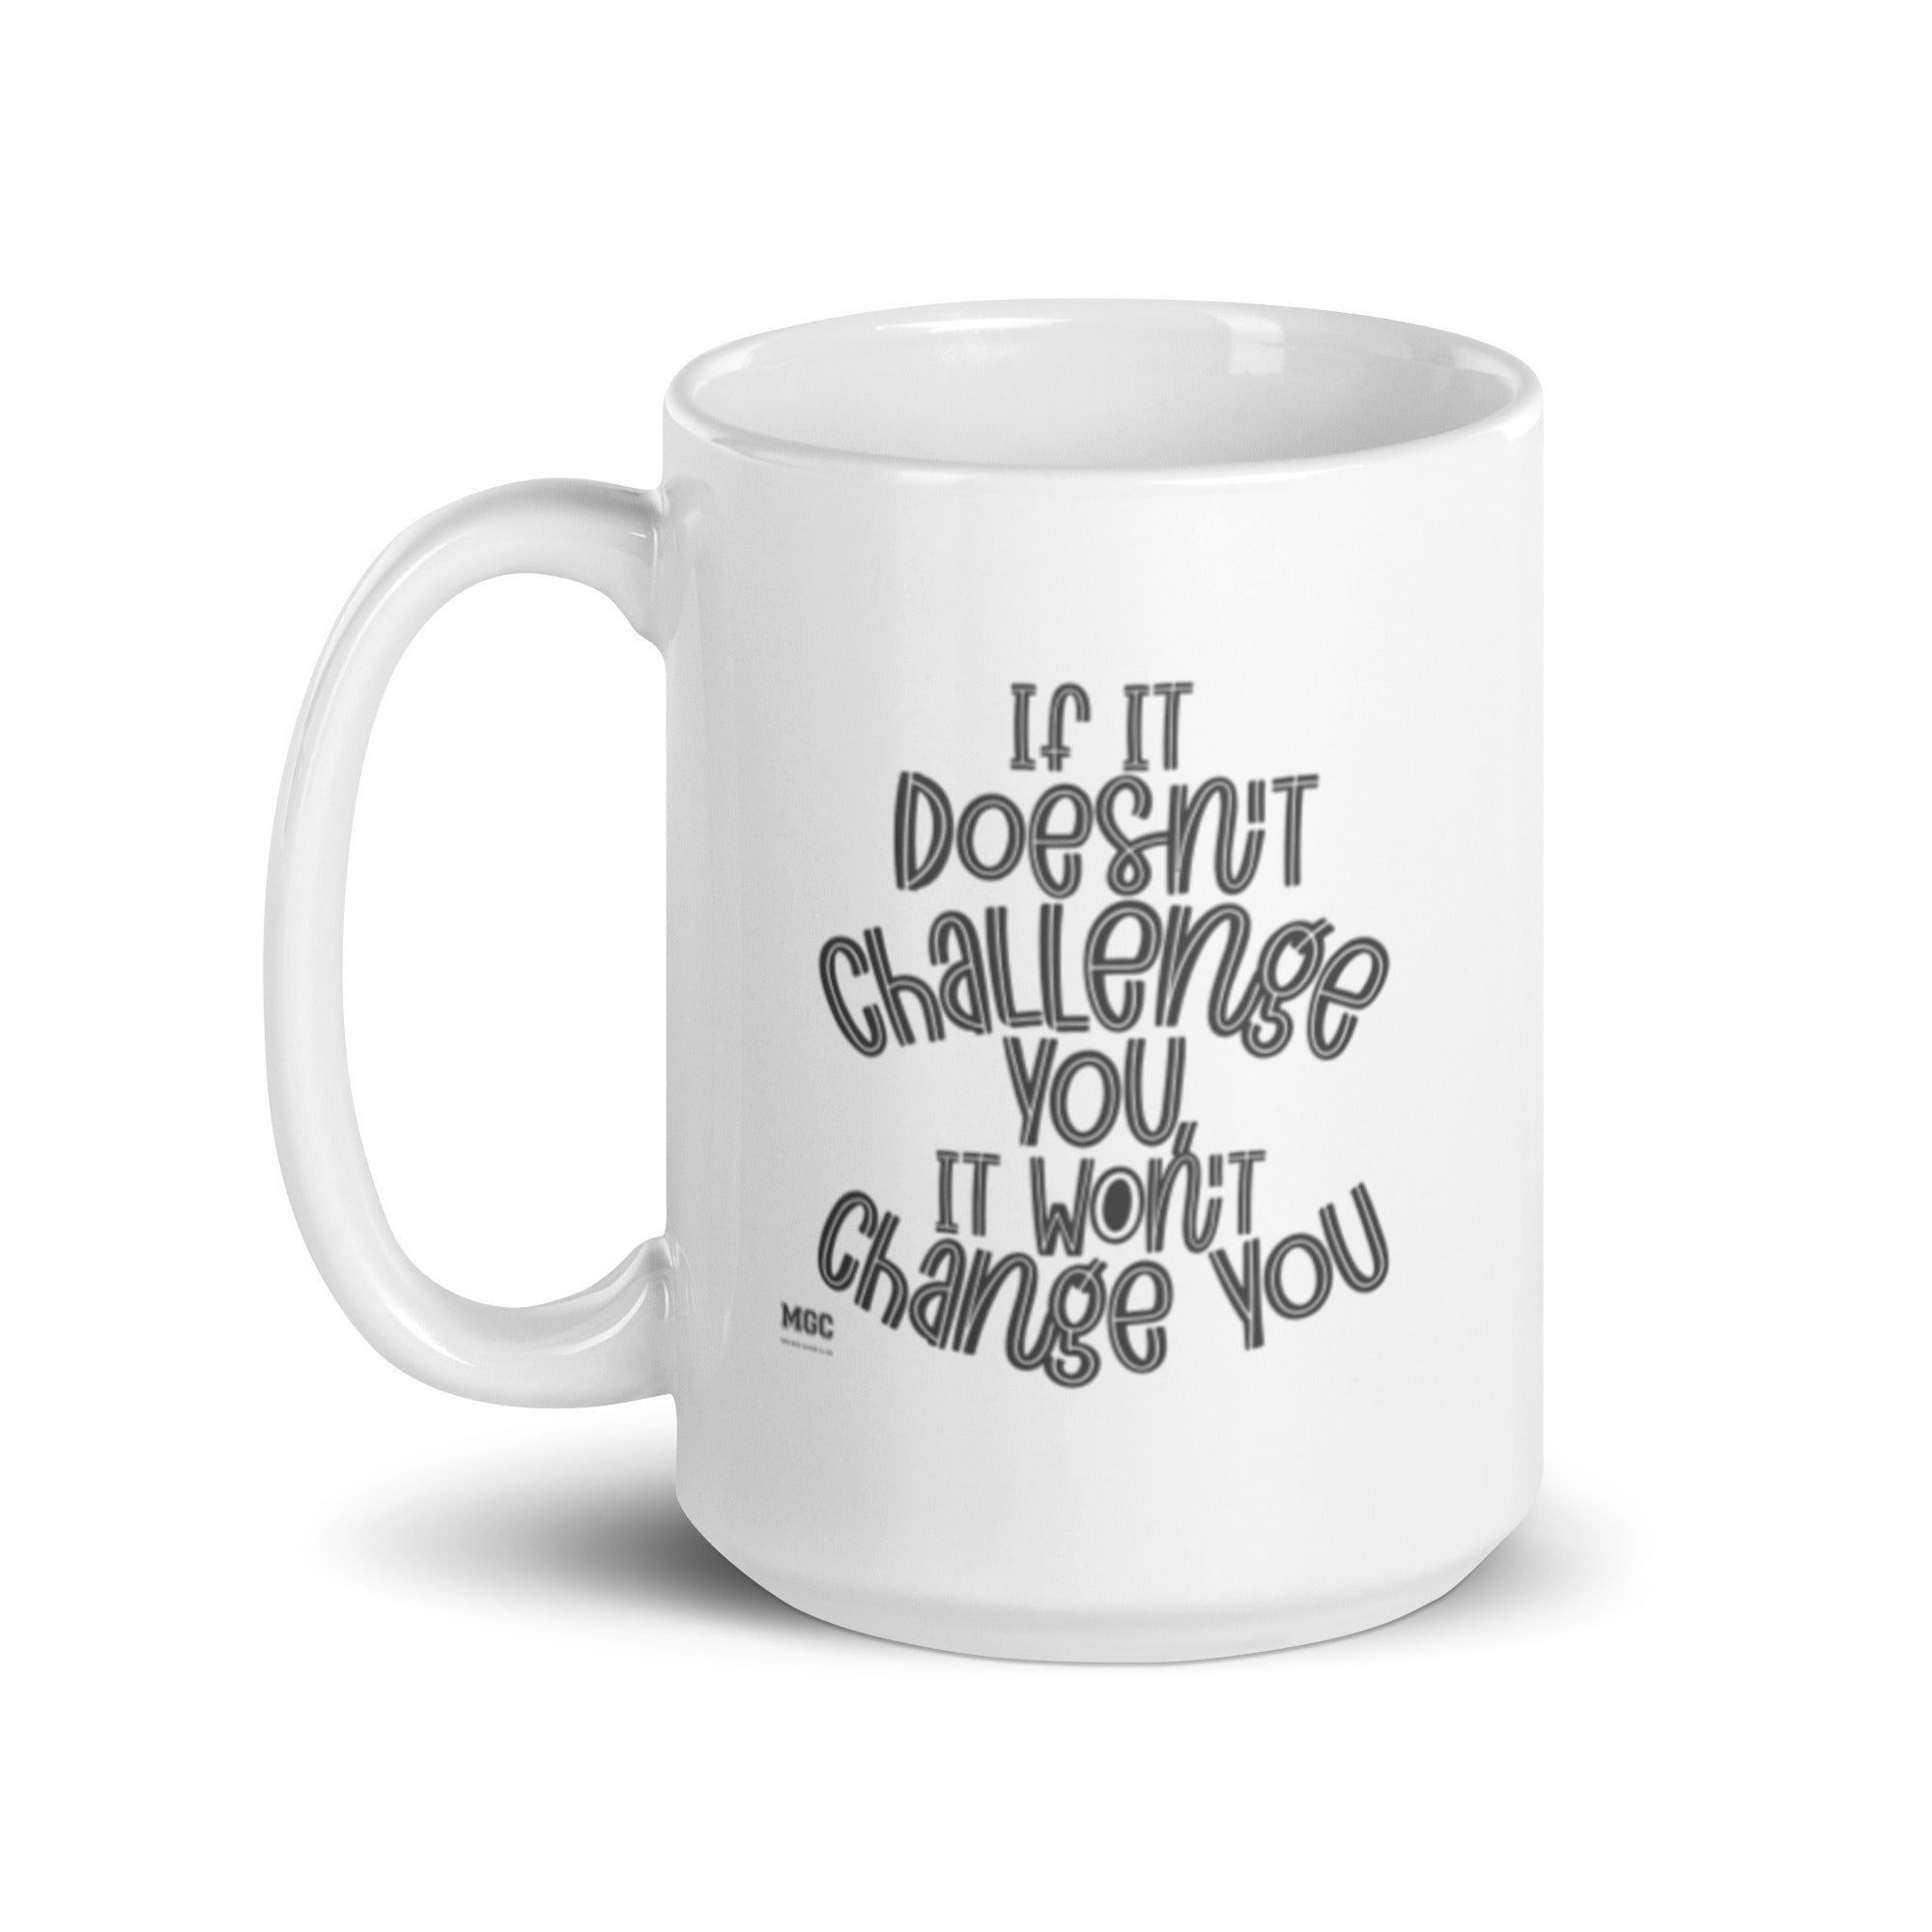 MGC White glossy mug If It doesn't challenge you